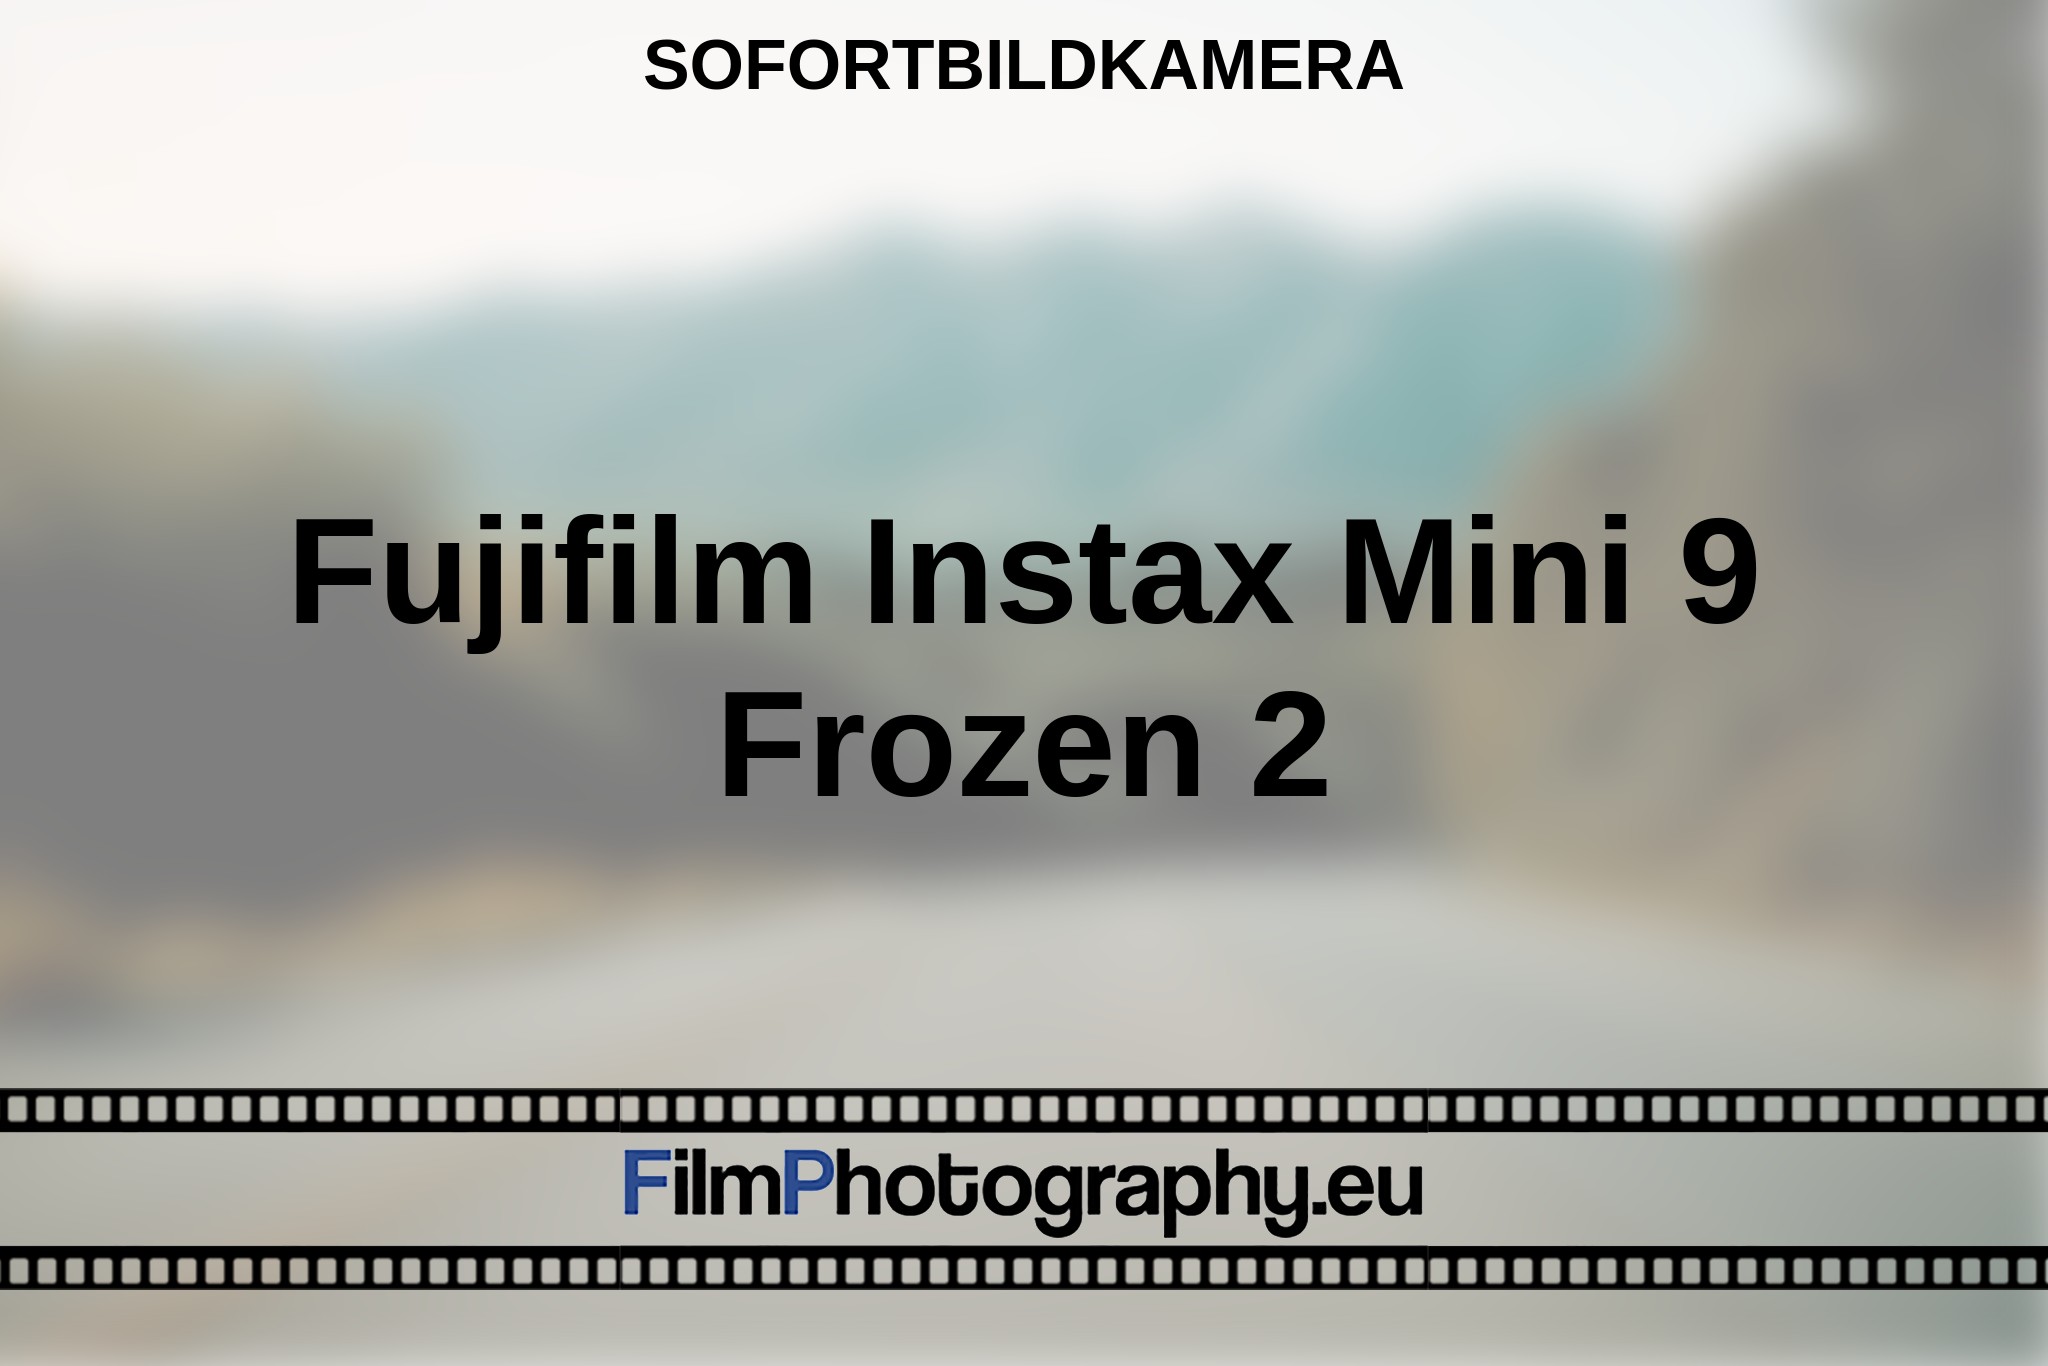 fujifilm-instax-mini-9-frozen-2-sofortbildkamera-bnv.jpg